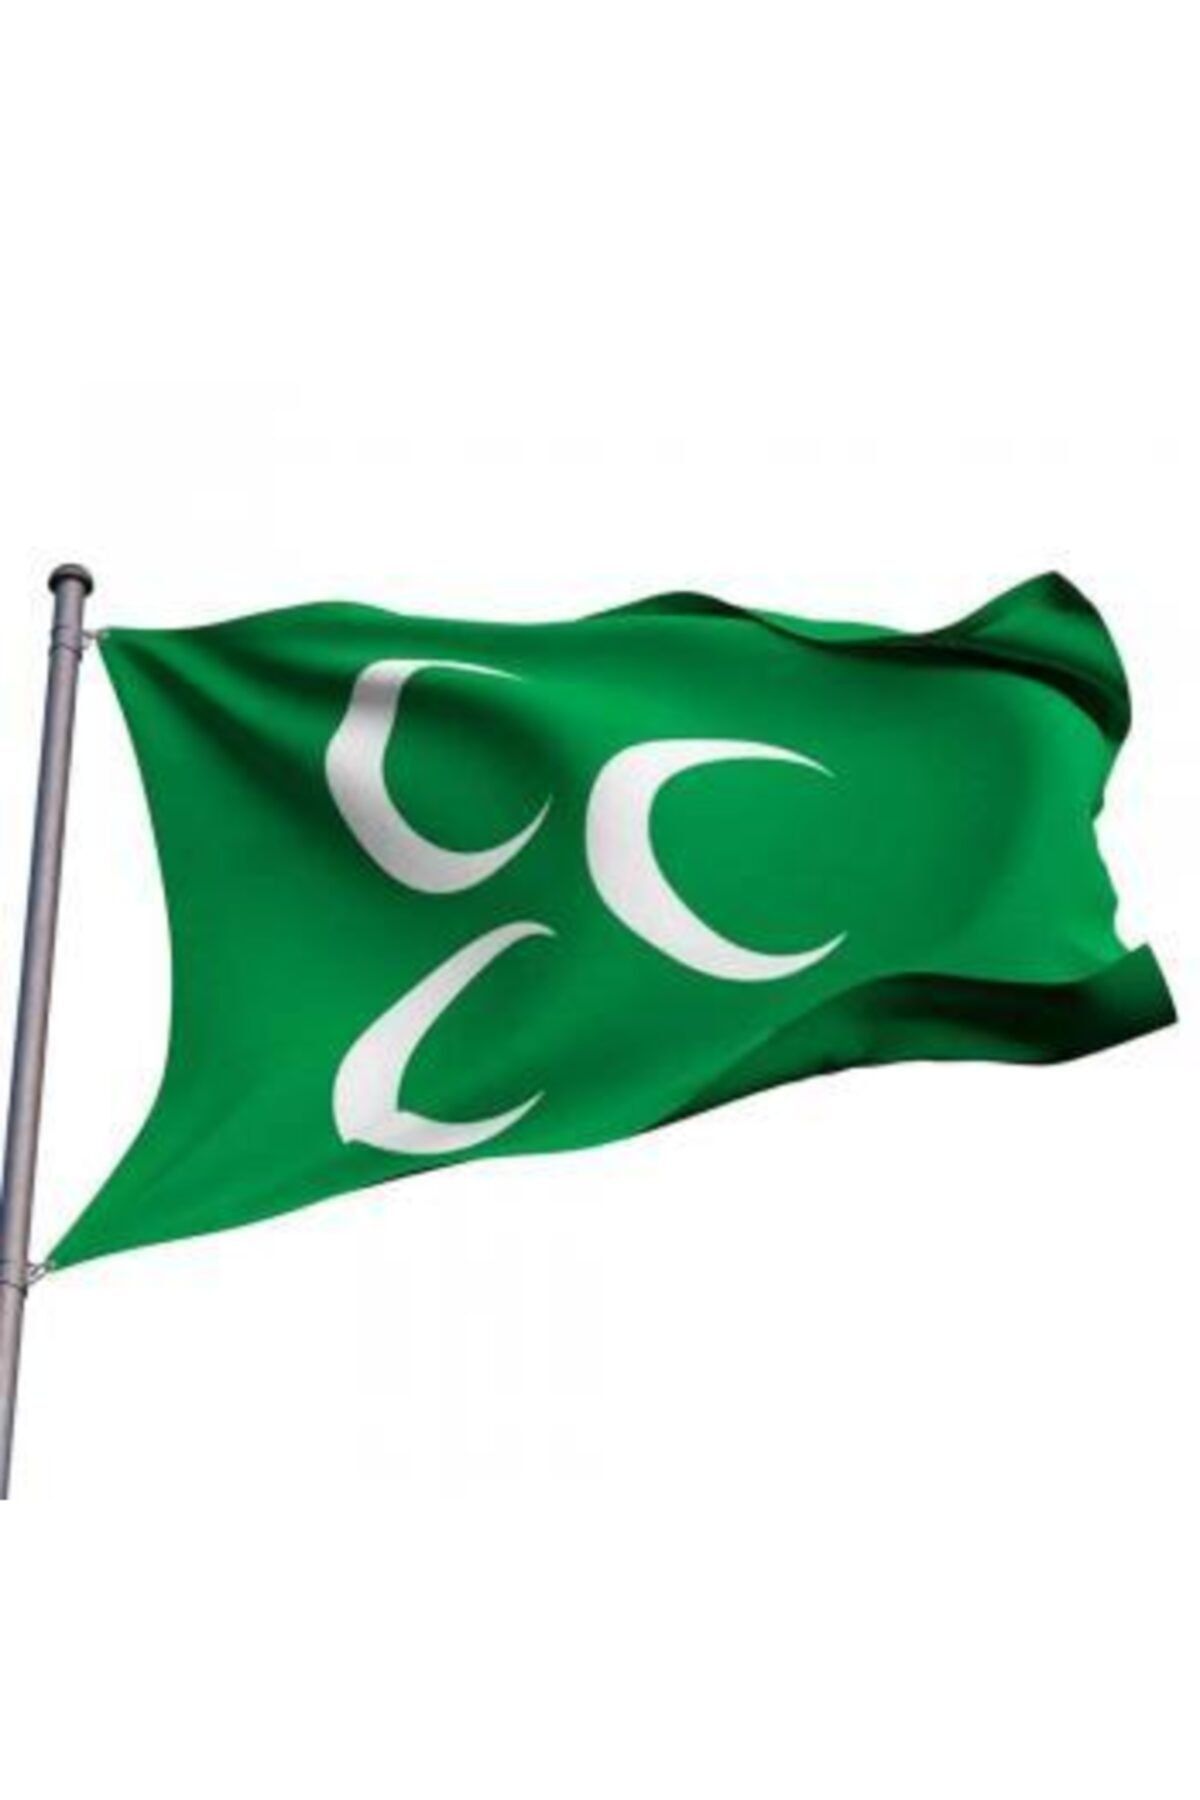 hazar bayrak Osmanlı Sancağı Bayrağı 150x225cm Imalatcıdan